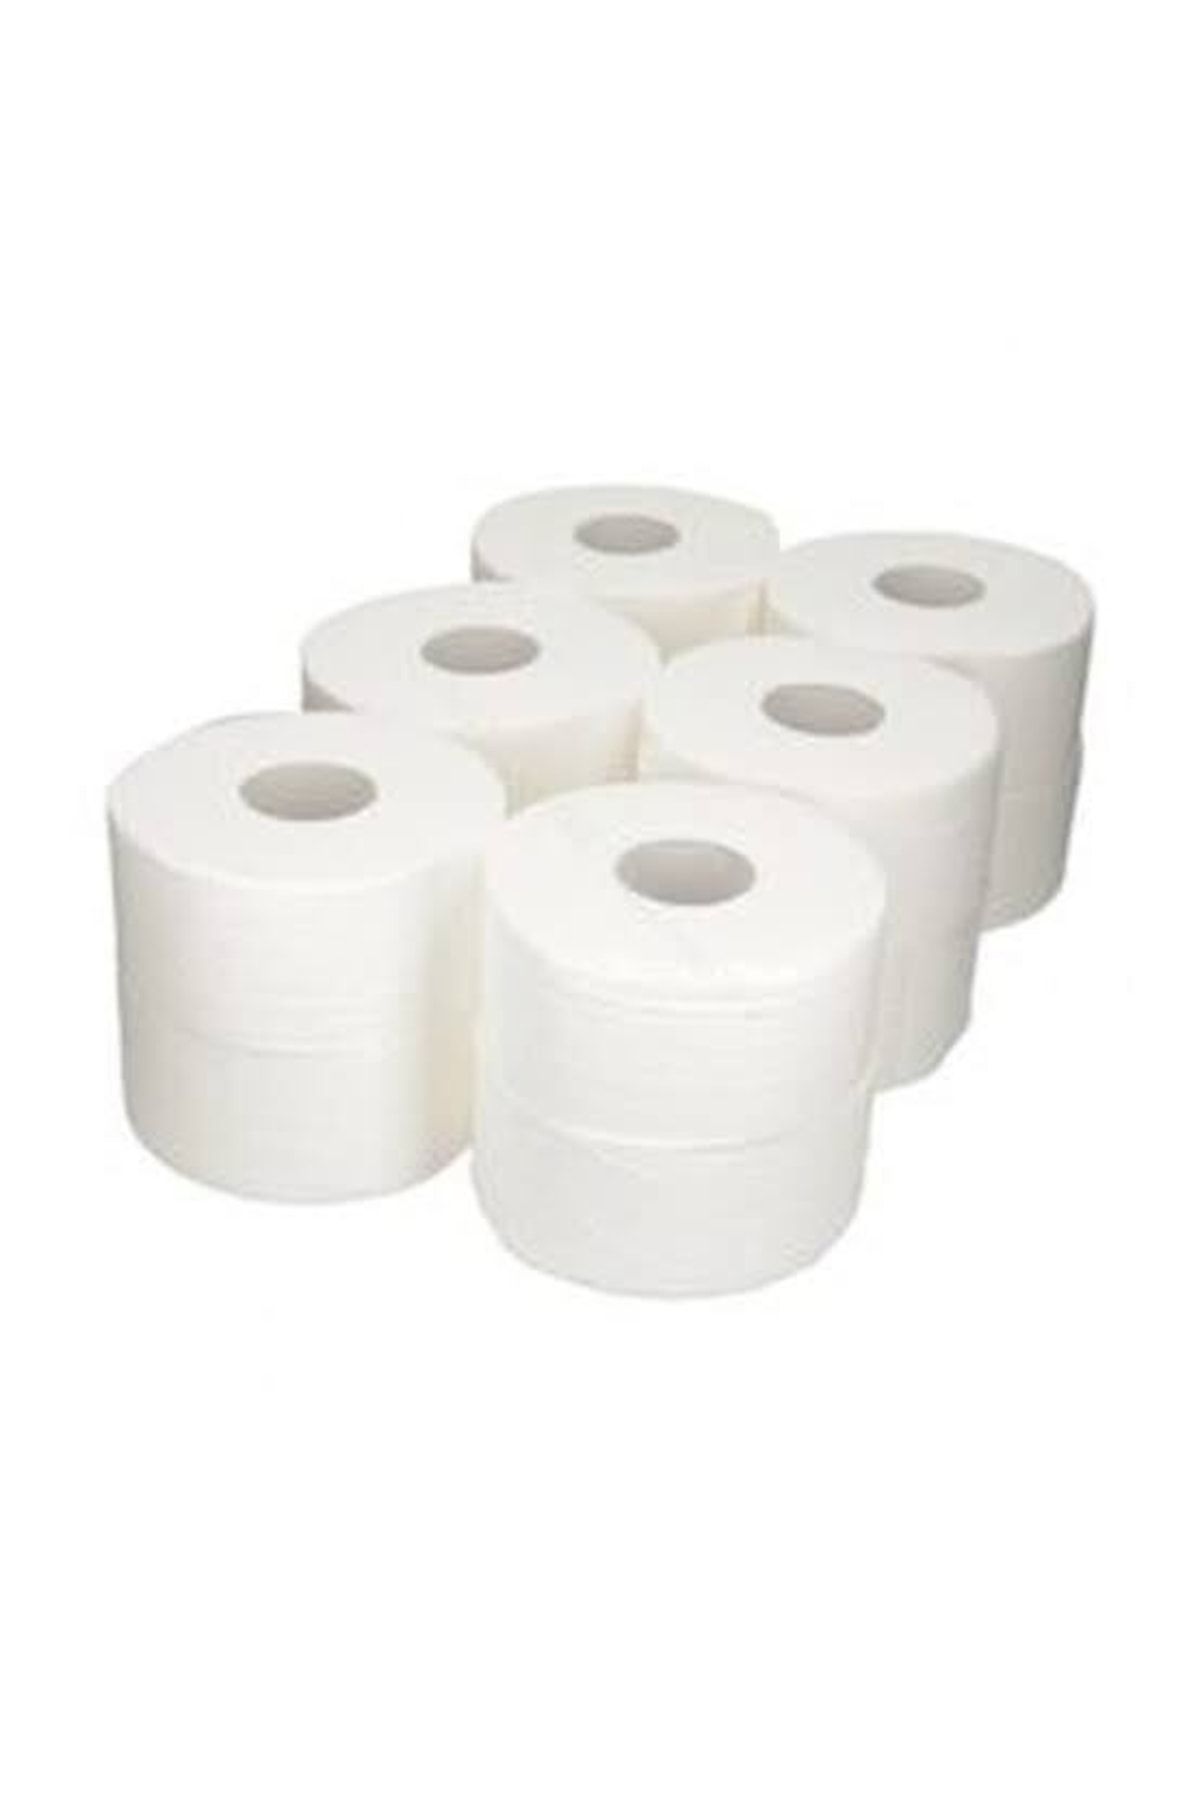 Züler Içten Çekmeli Mini Jumbo Cimri Tuvalet Kağıdı 12 Li Paket ( 3 ). Kg Lik Avantaj Paket